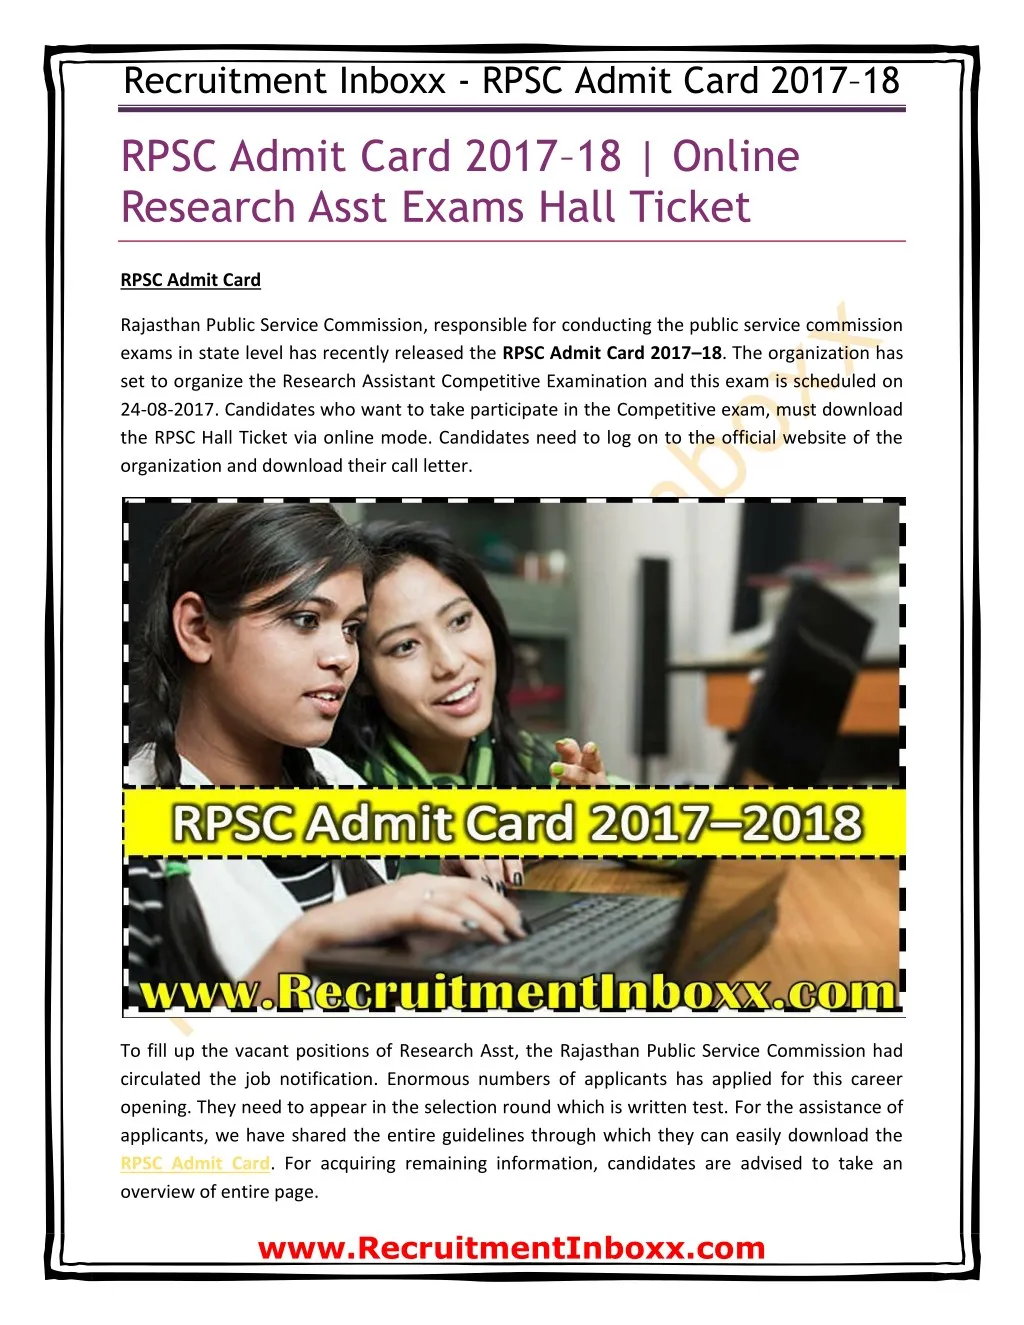 recruitment inboxx rpsc admit card 2017 18